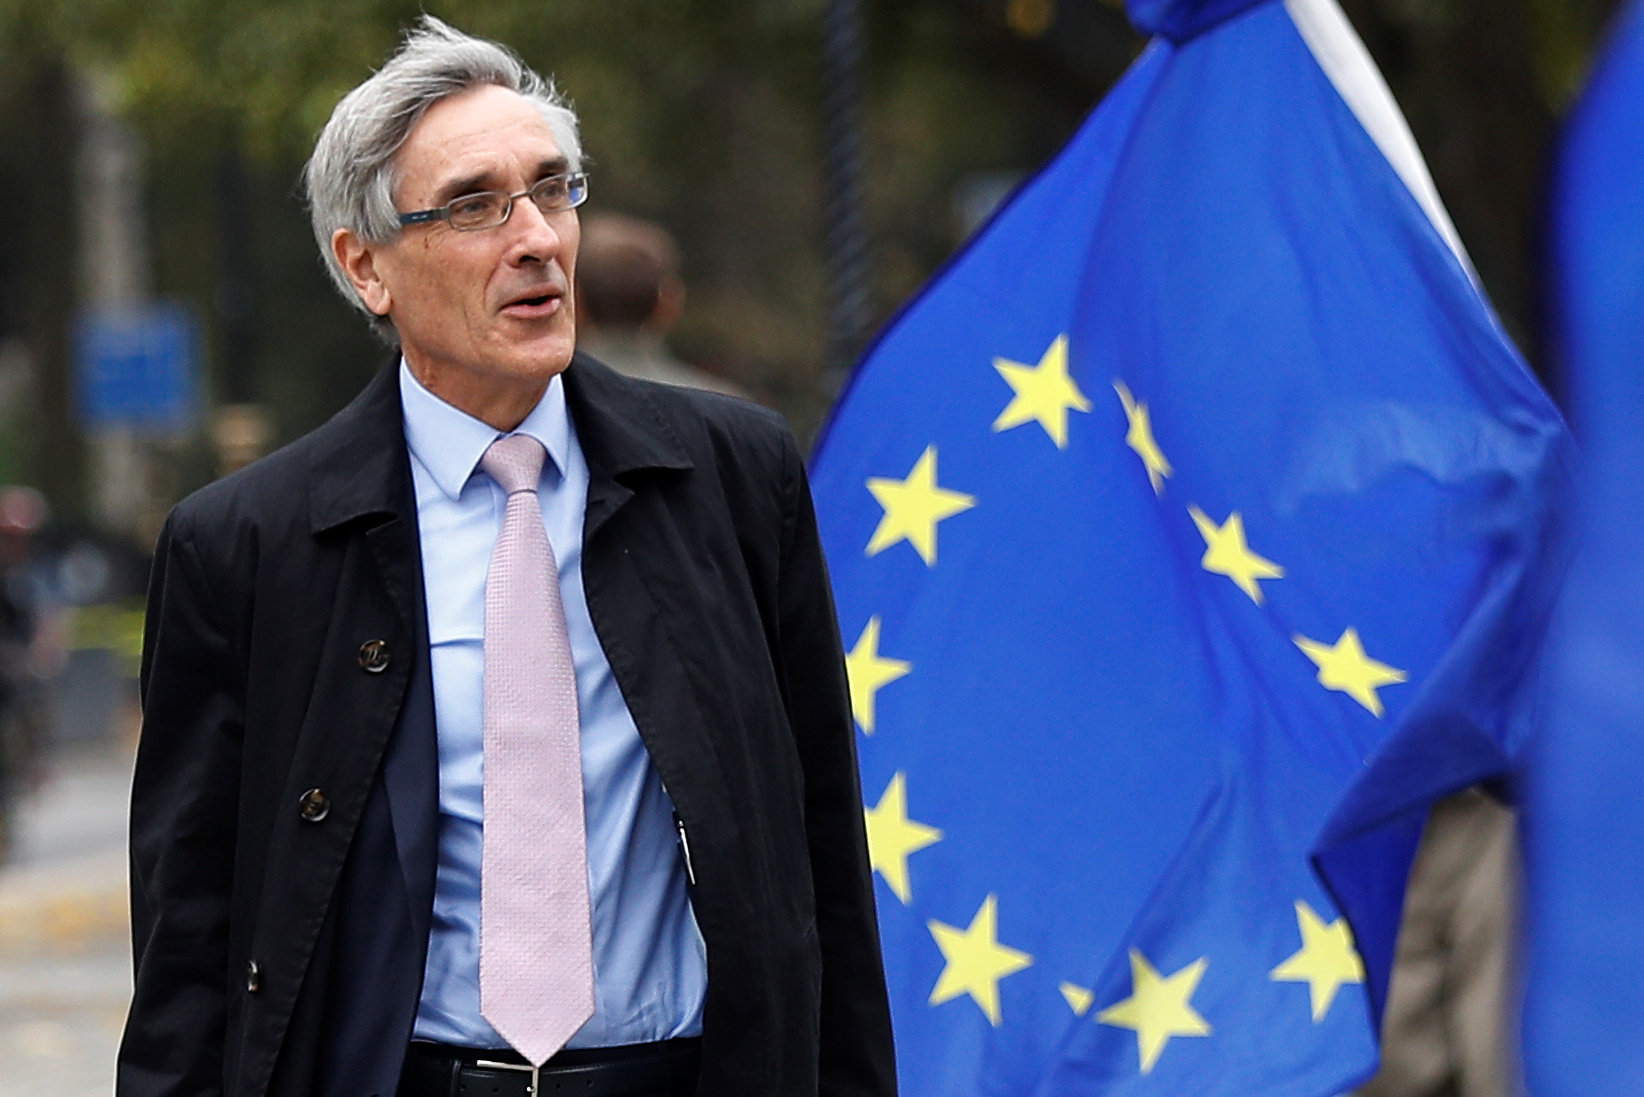 <i>Despite being photo-bombed by this EU flag, John Redwood is a veteran Tory eurosceptic.&nbsp;</i>